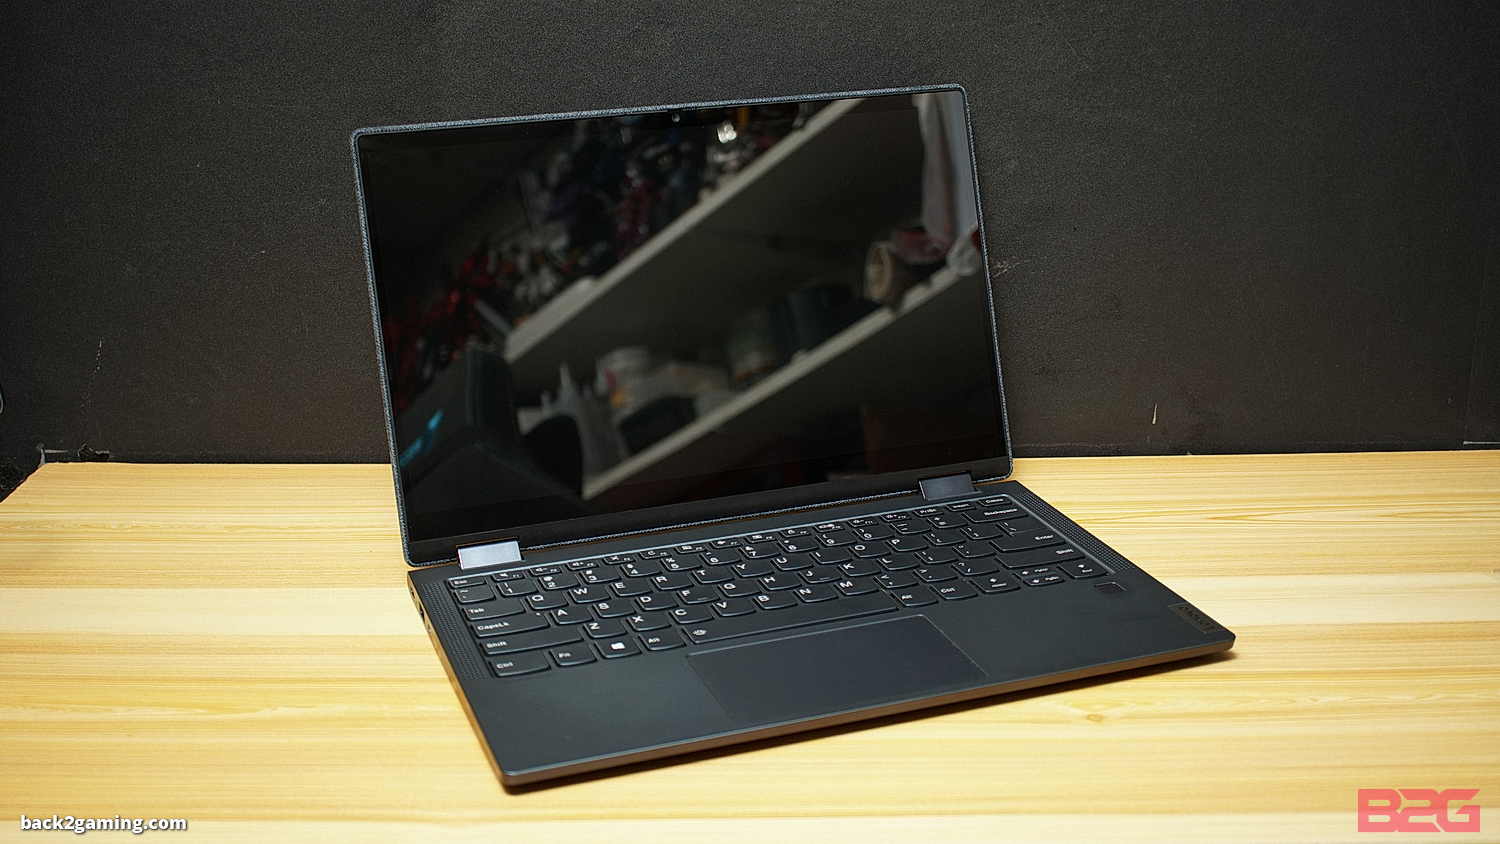 More Cores For Everyone: Amd Ryzen On Lenovo Laptops